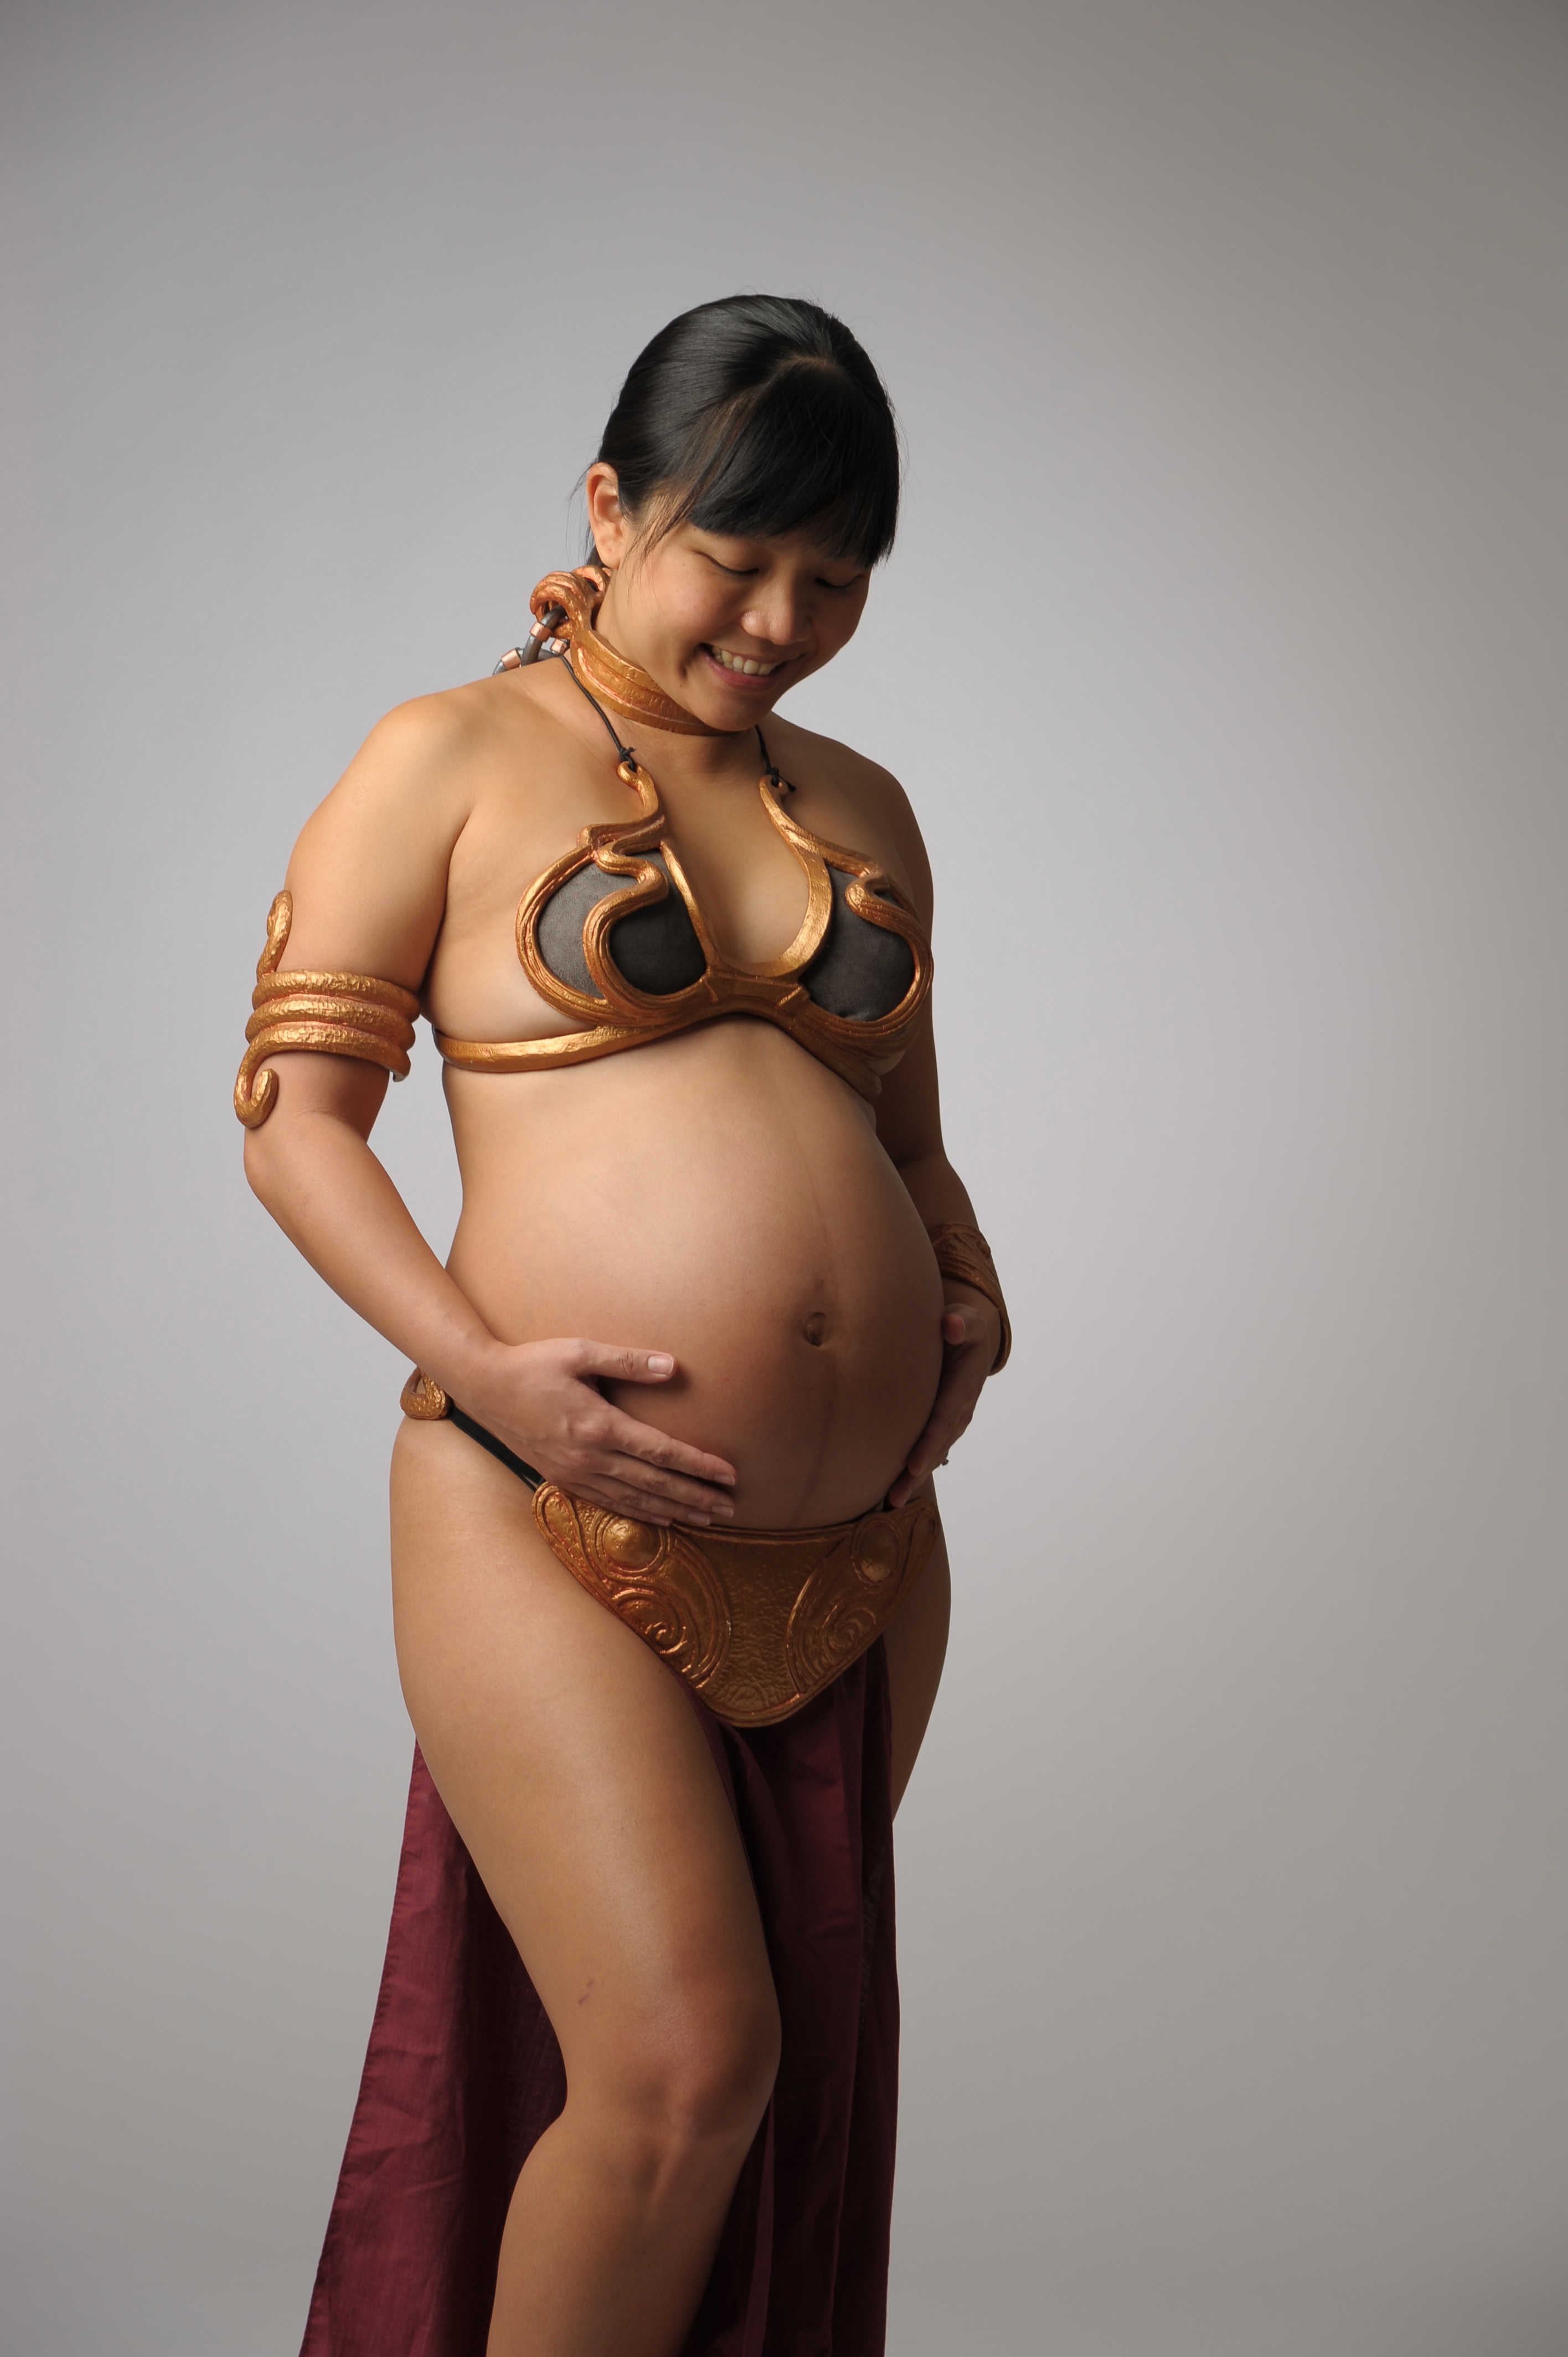 alston green recommends pregnant slave princess leia pic